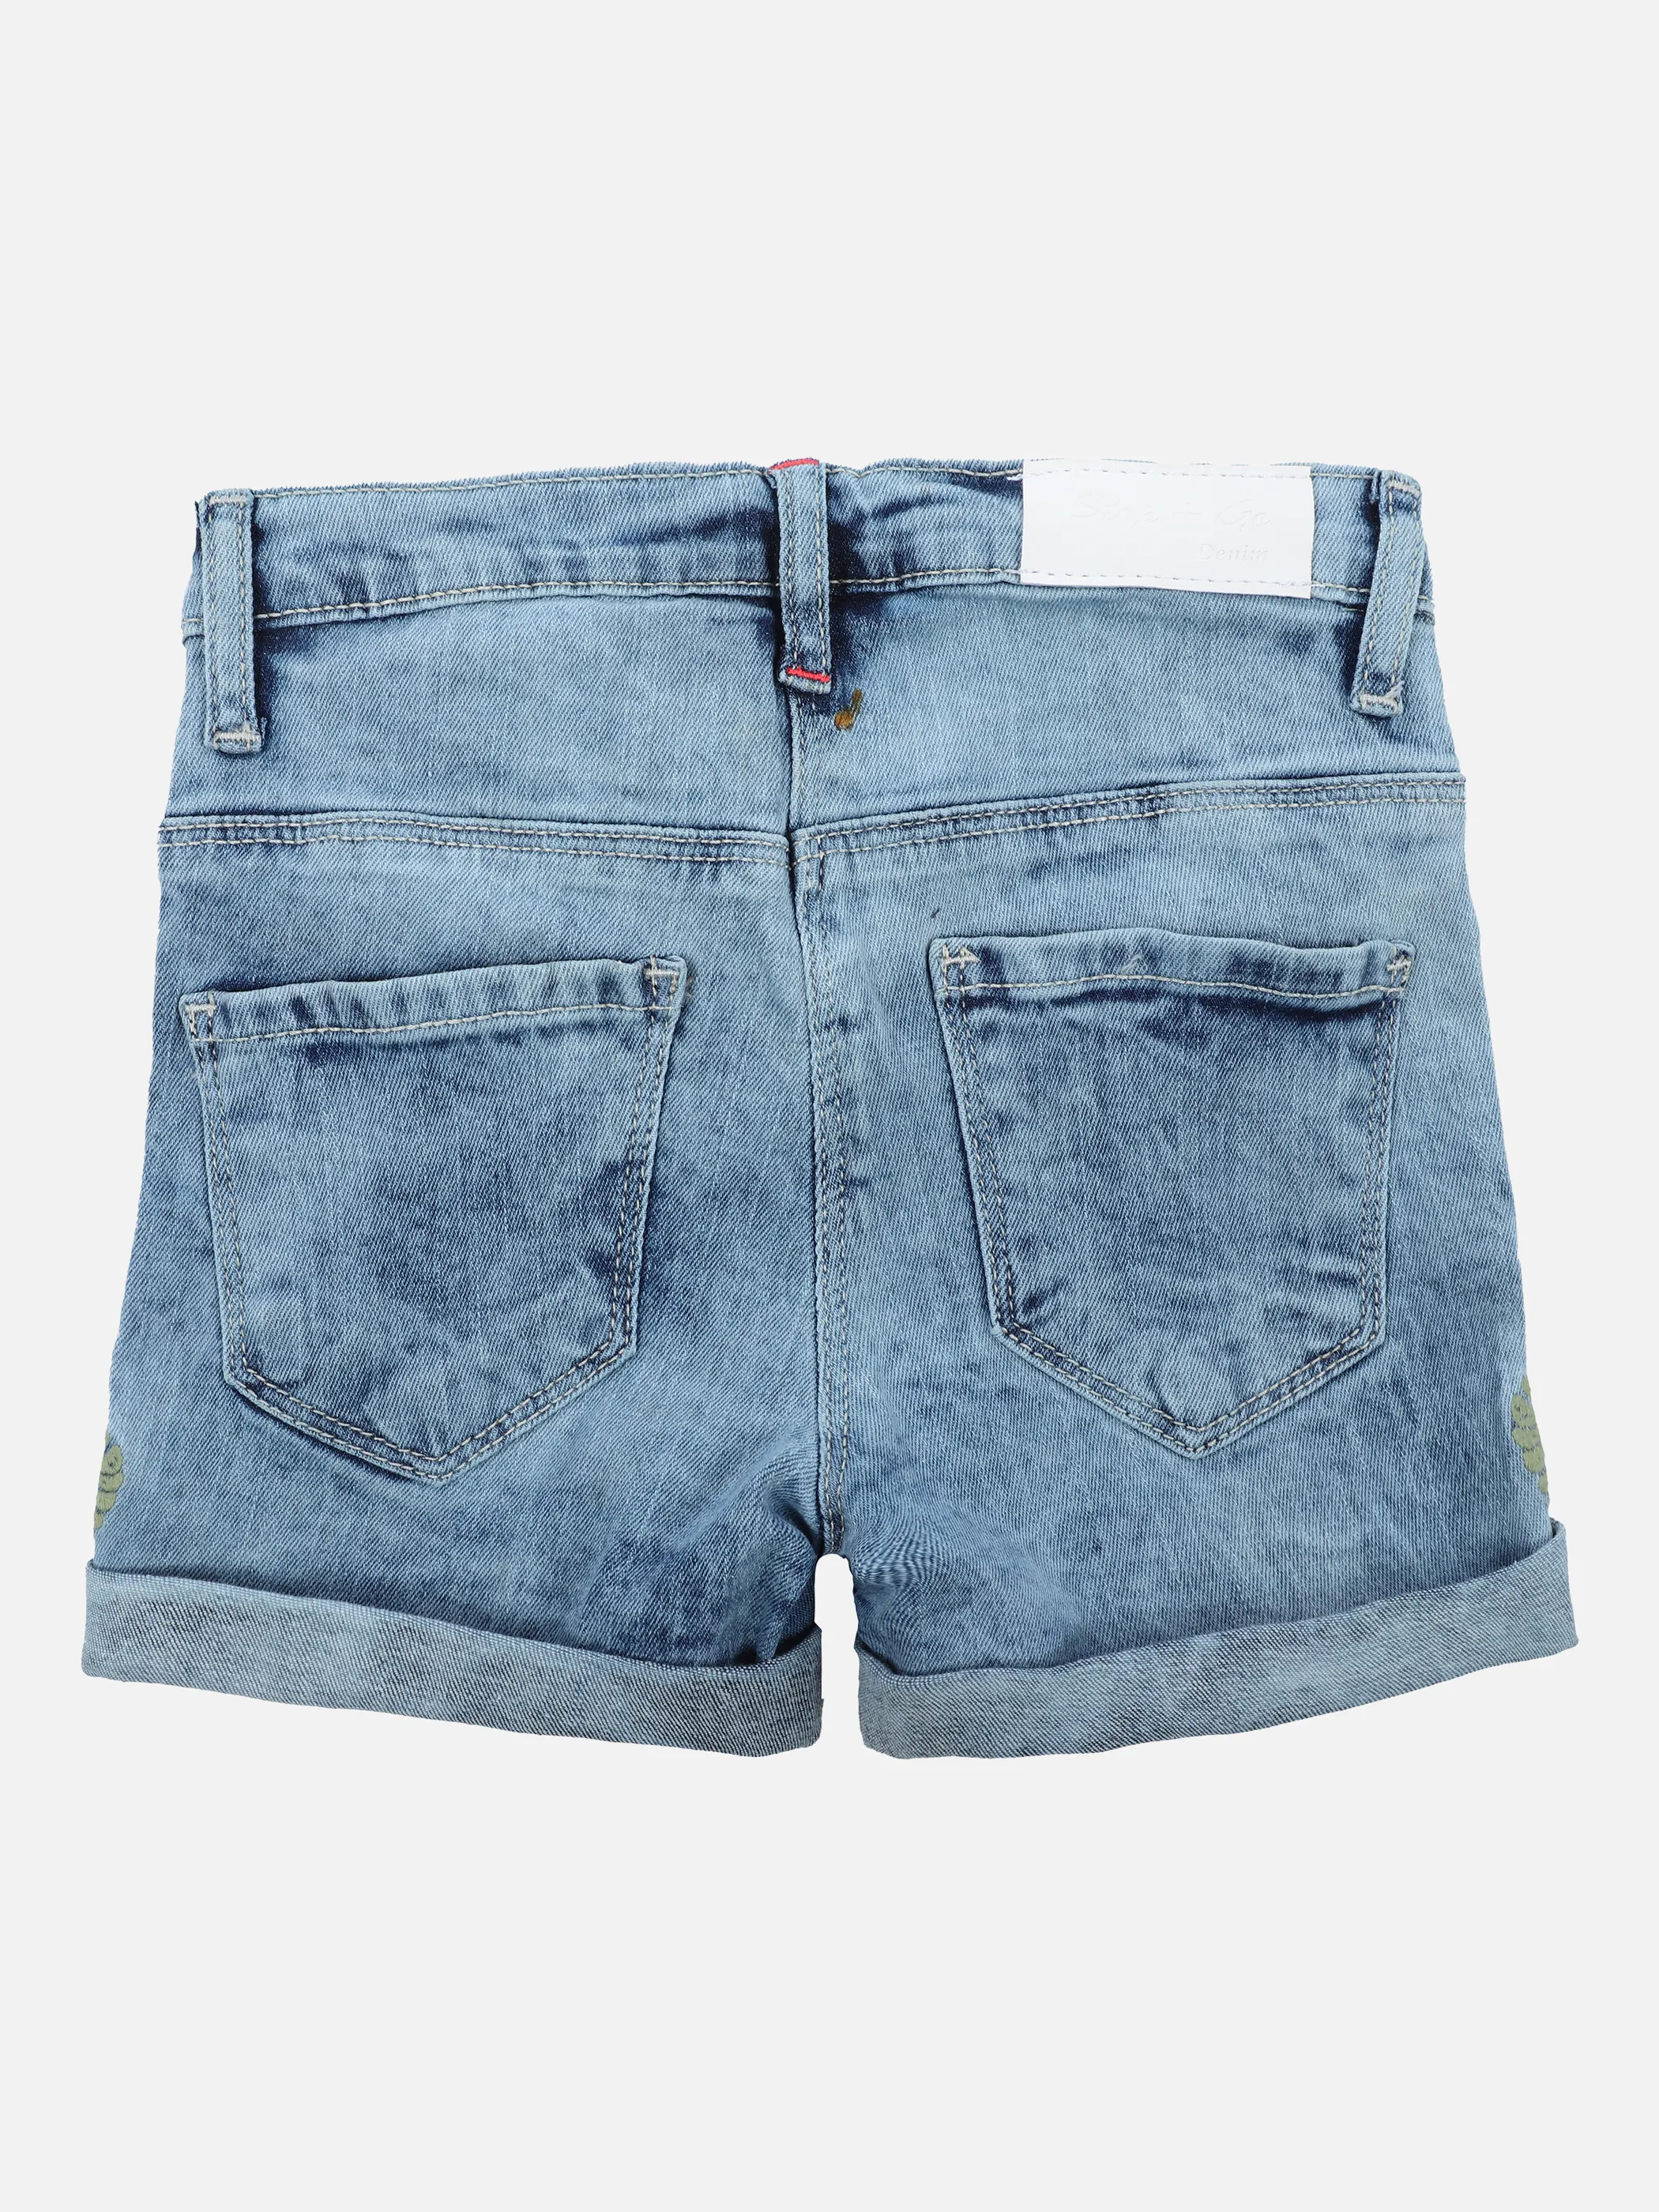 Stop + Go MG Jeans Shorts in mittelblau Blau 853541 MITTELBLAU 2